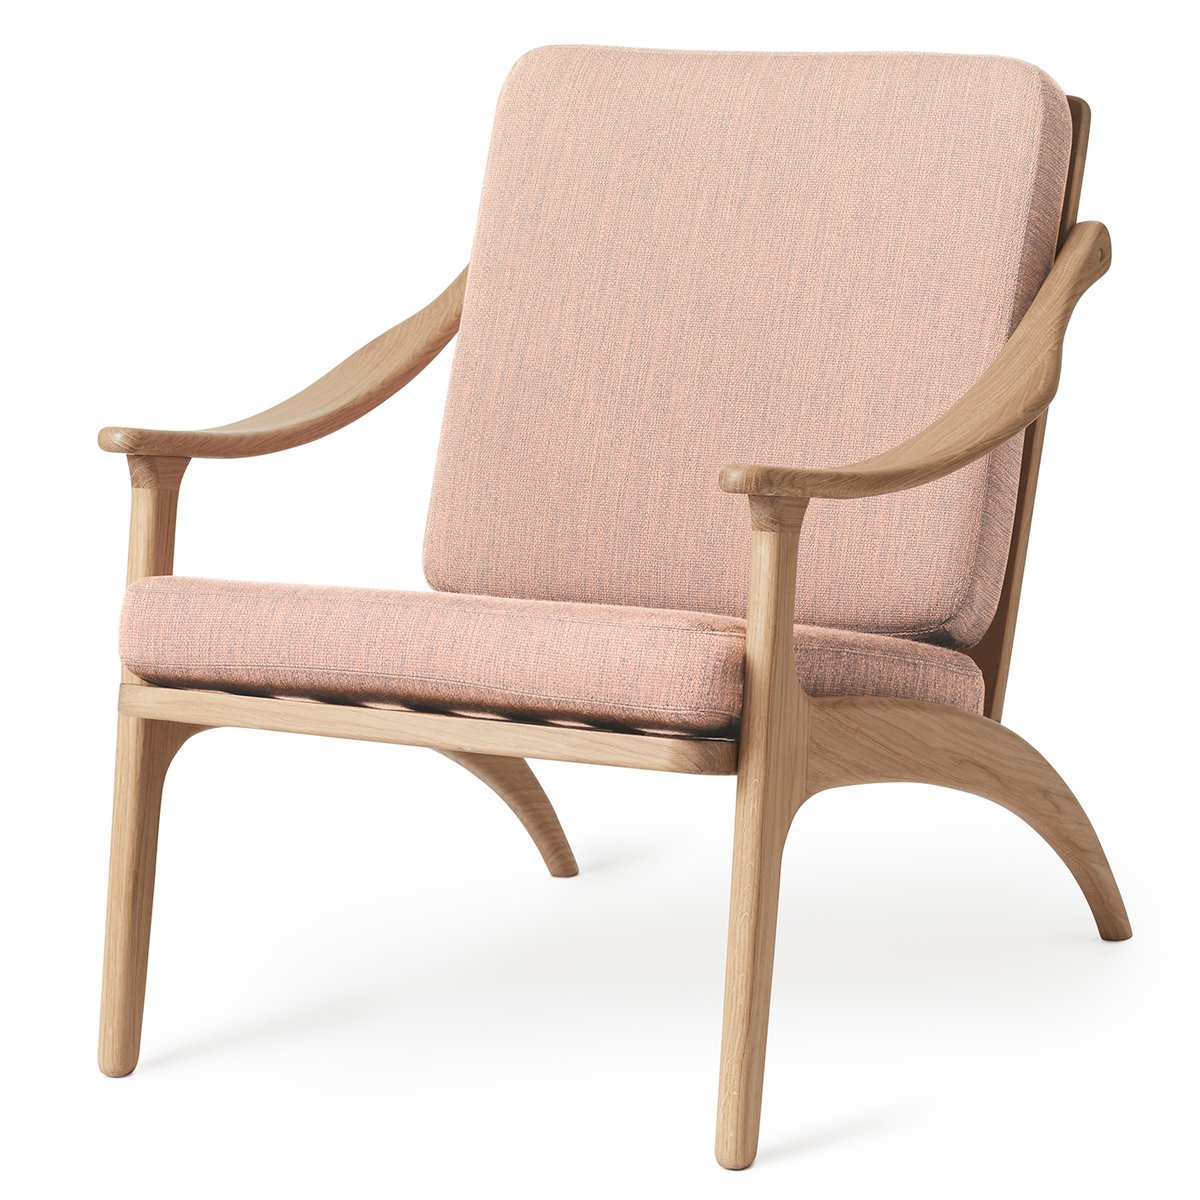 Warm Nordic Lean Back Canvas fauteuil witgeolied eikenhout Pale rose